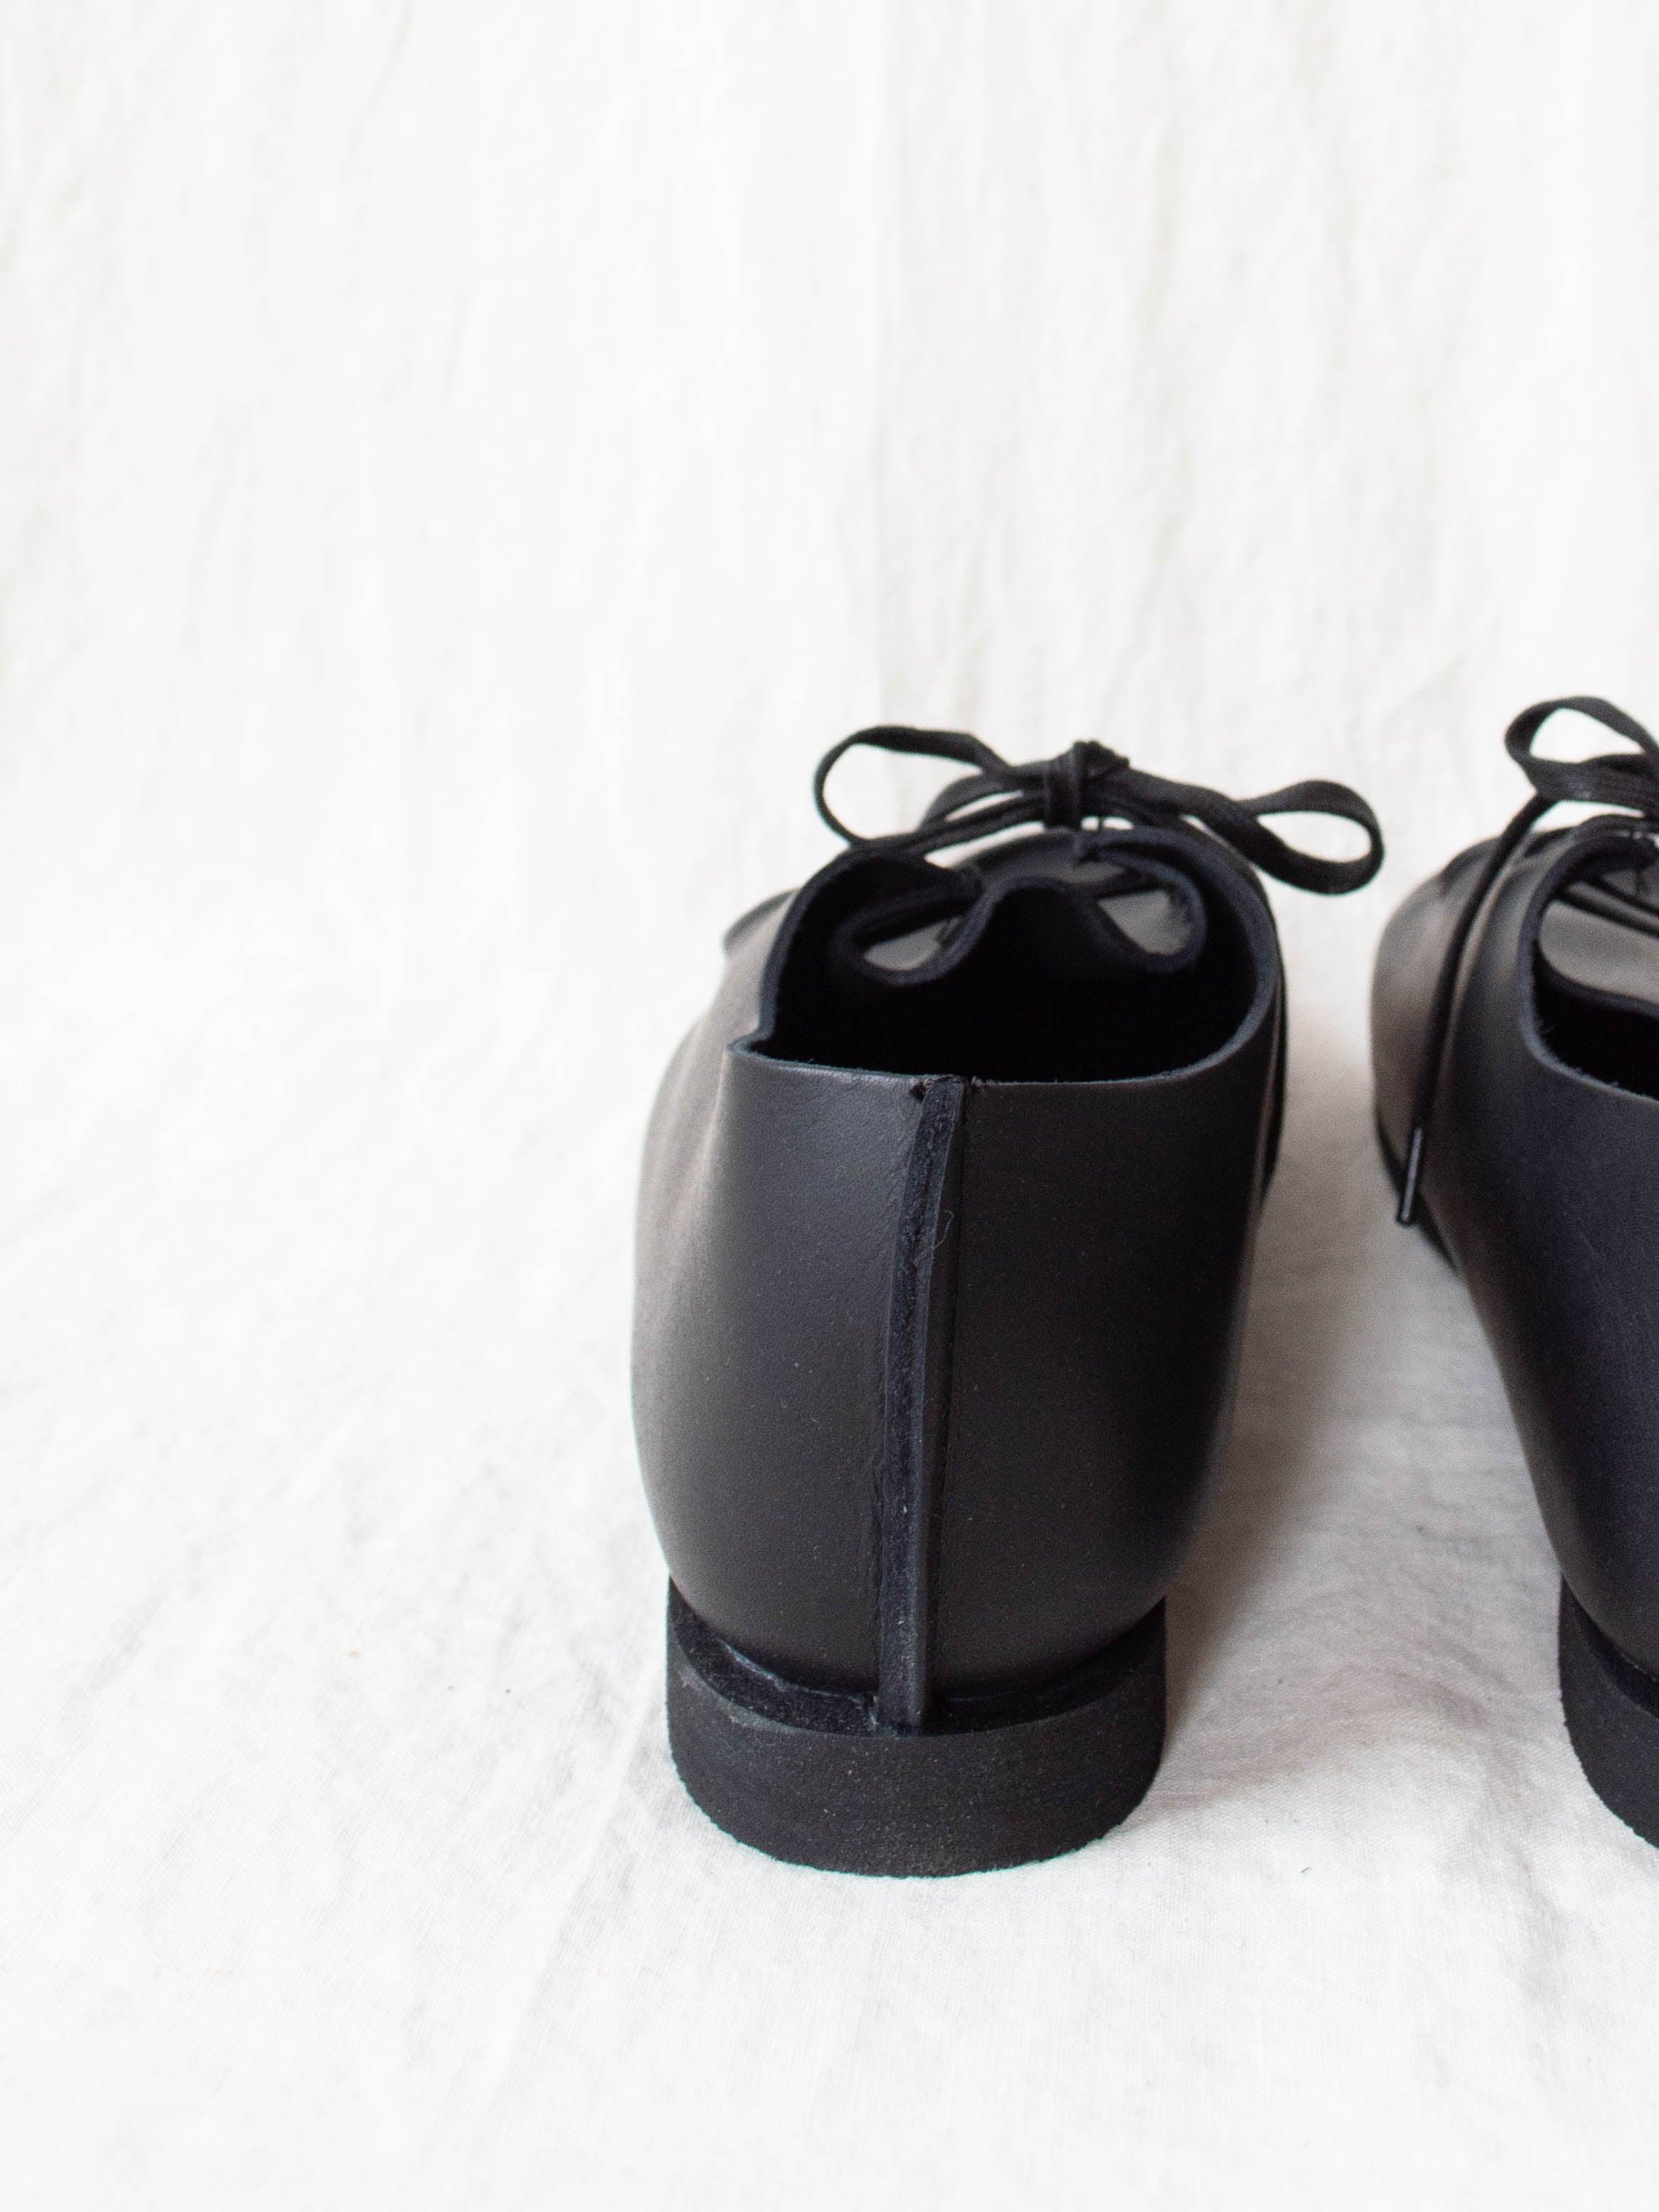 Namu Shop - Kojima Shoemakers Todd - Leather Black